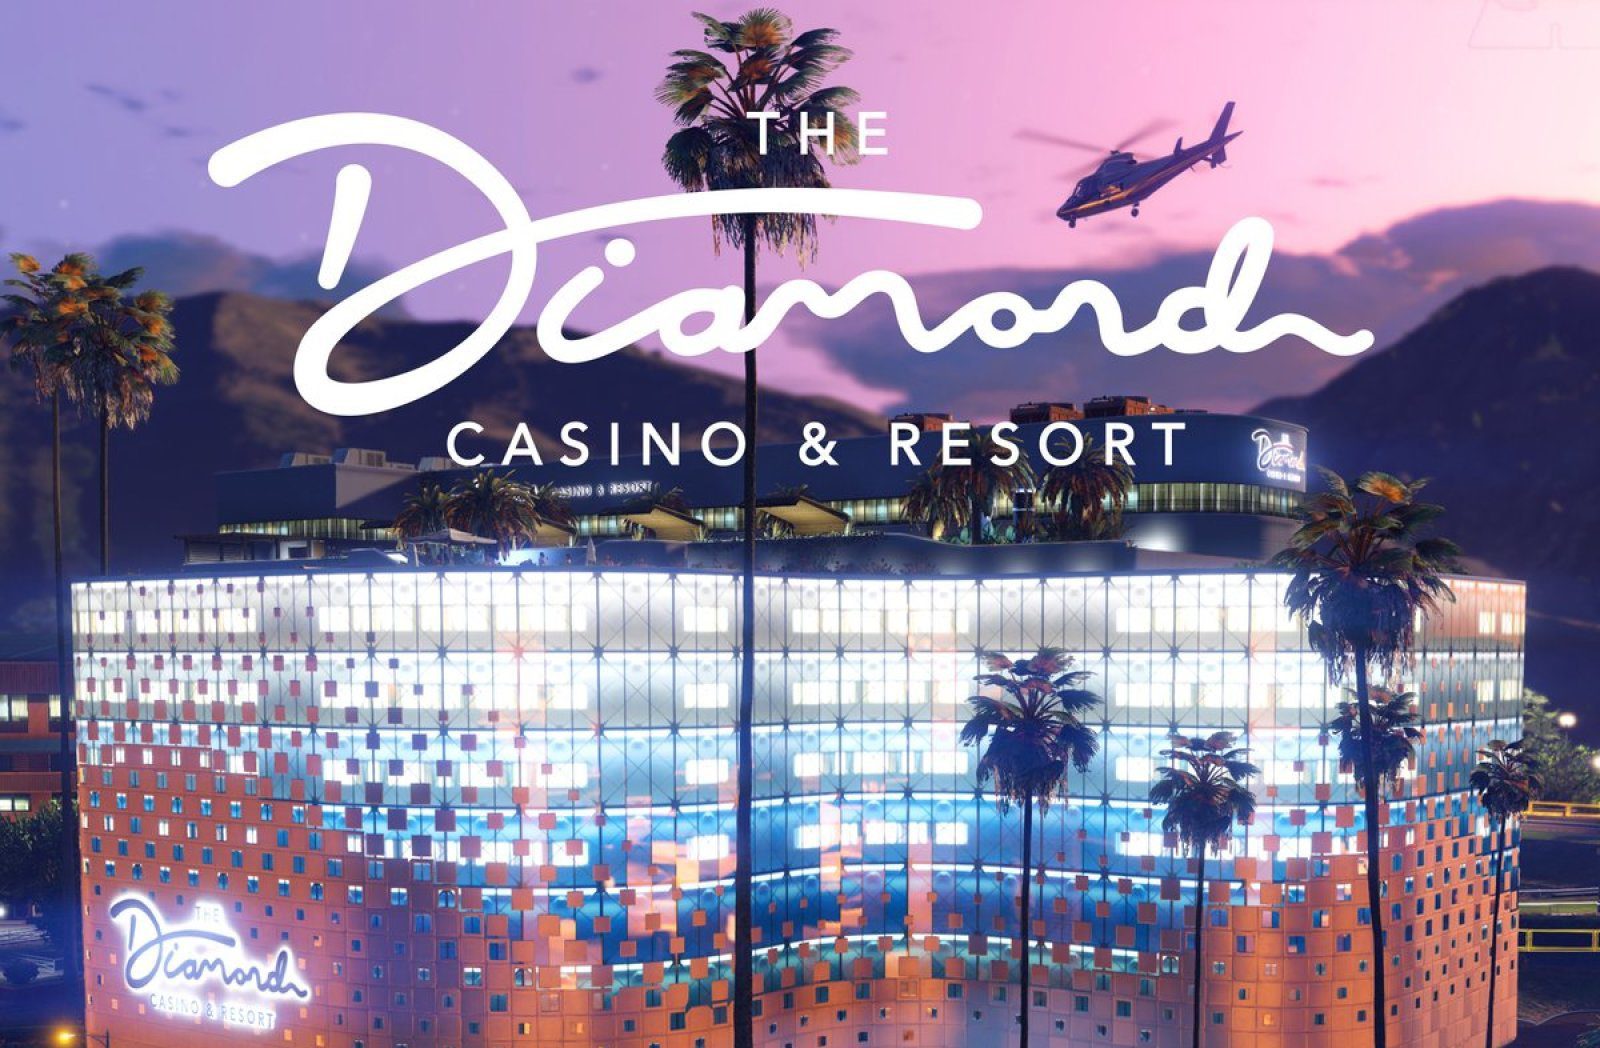 GTA Online's The Diamond Casino & Resort